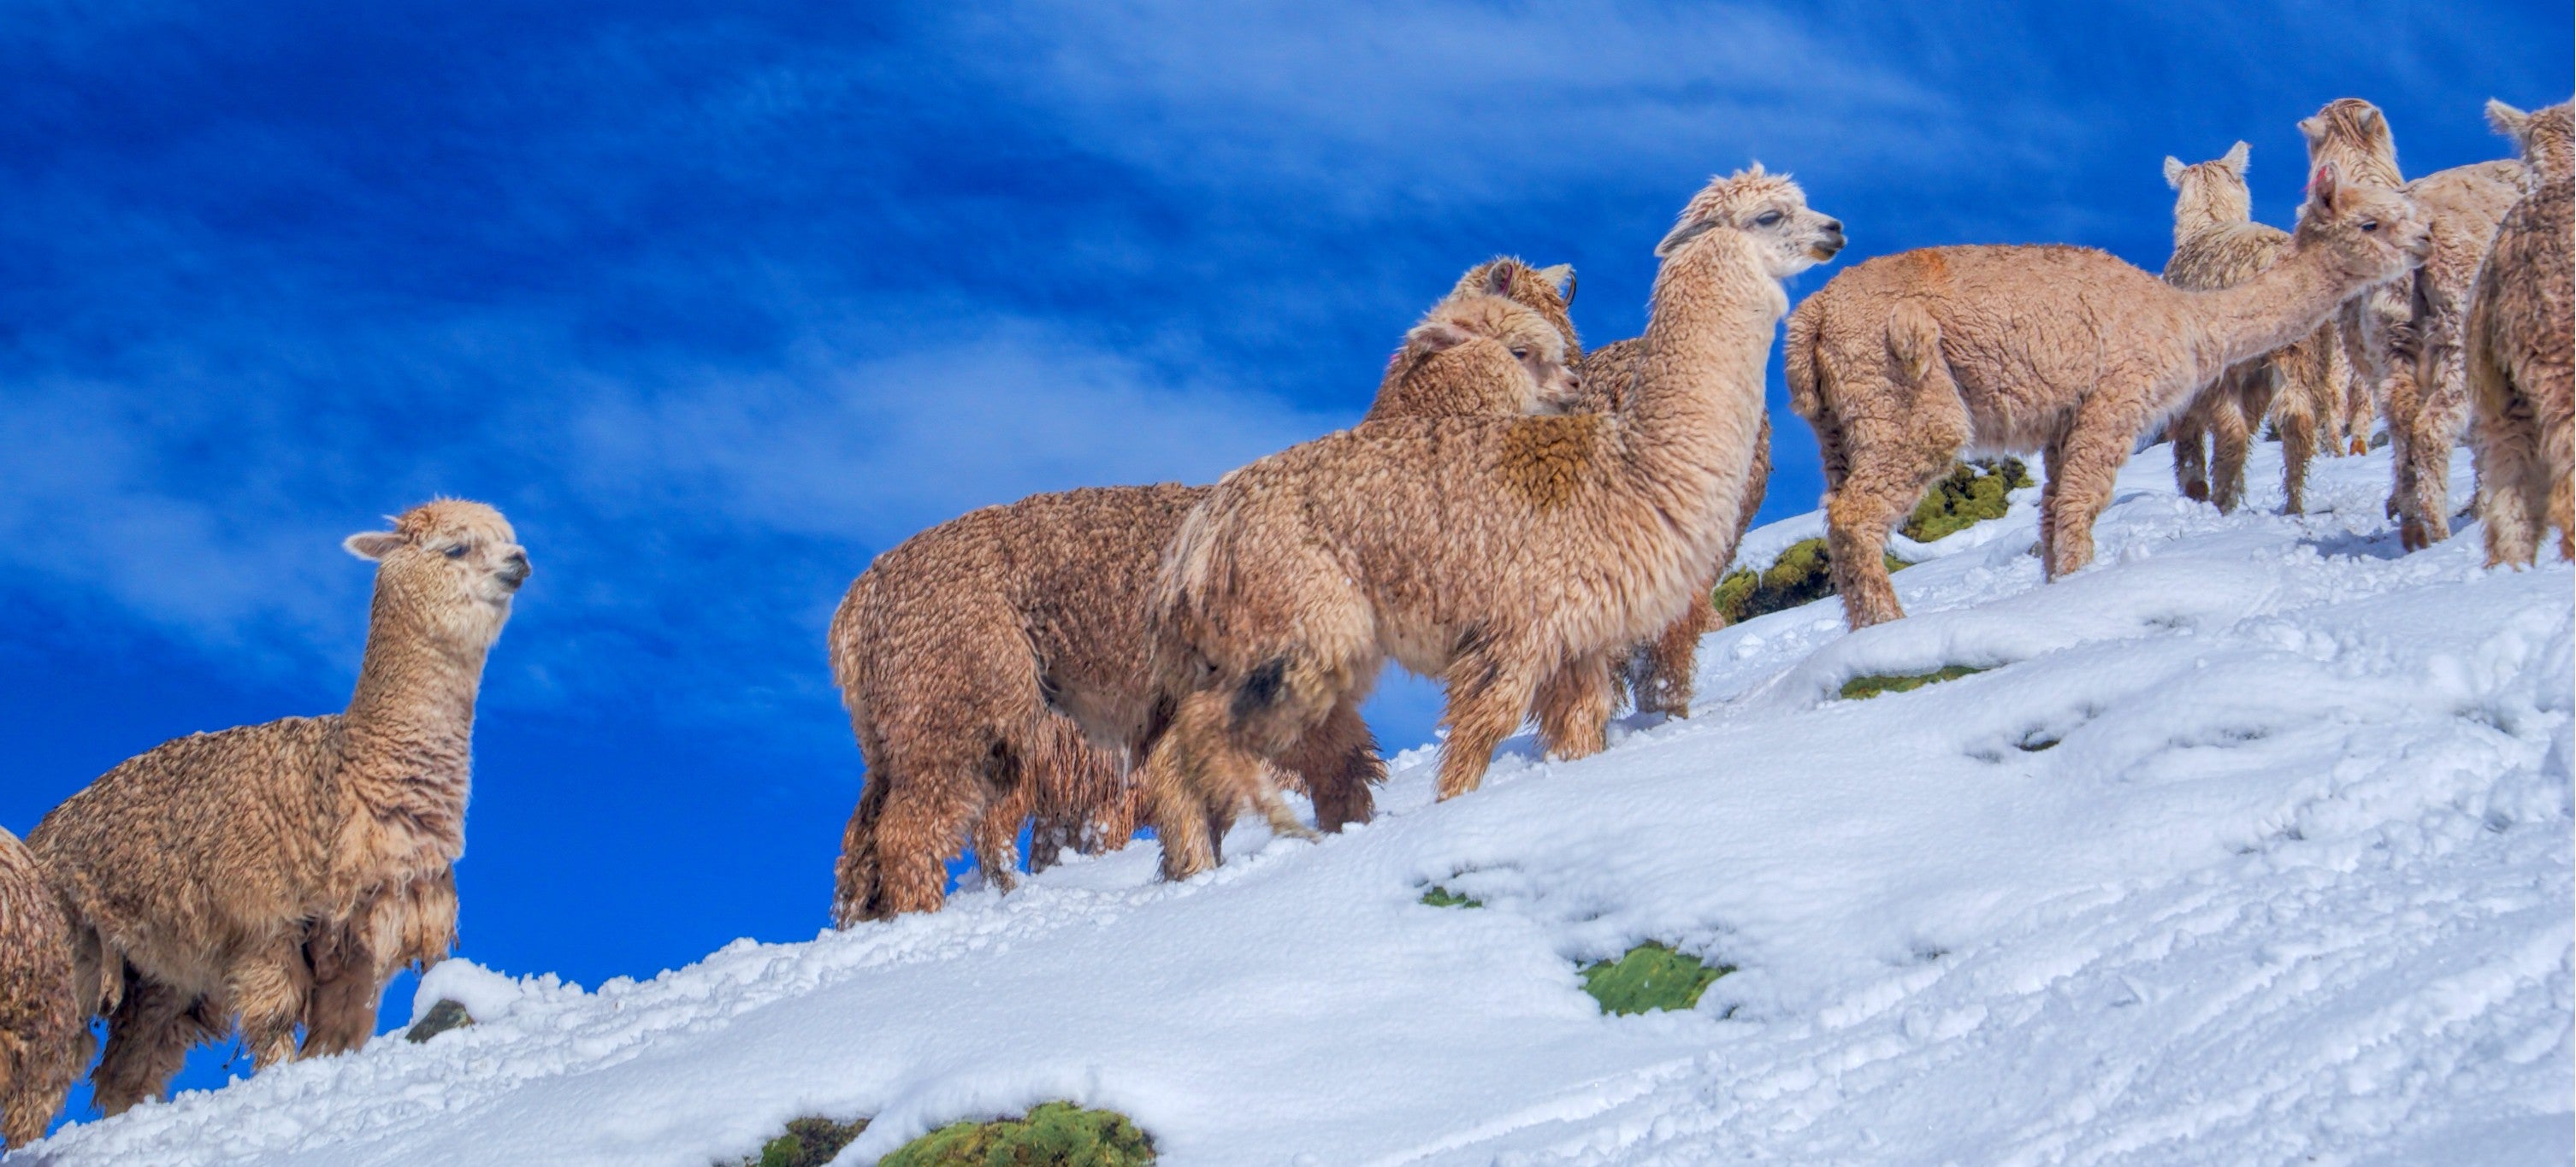 alpacas hiking the snow under a blue sky